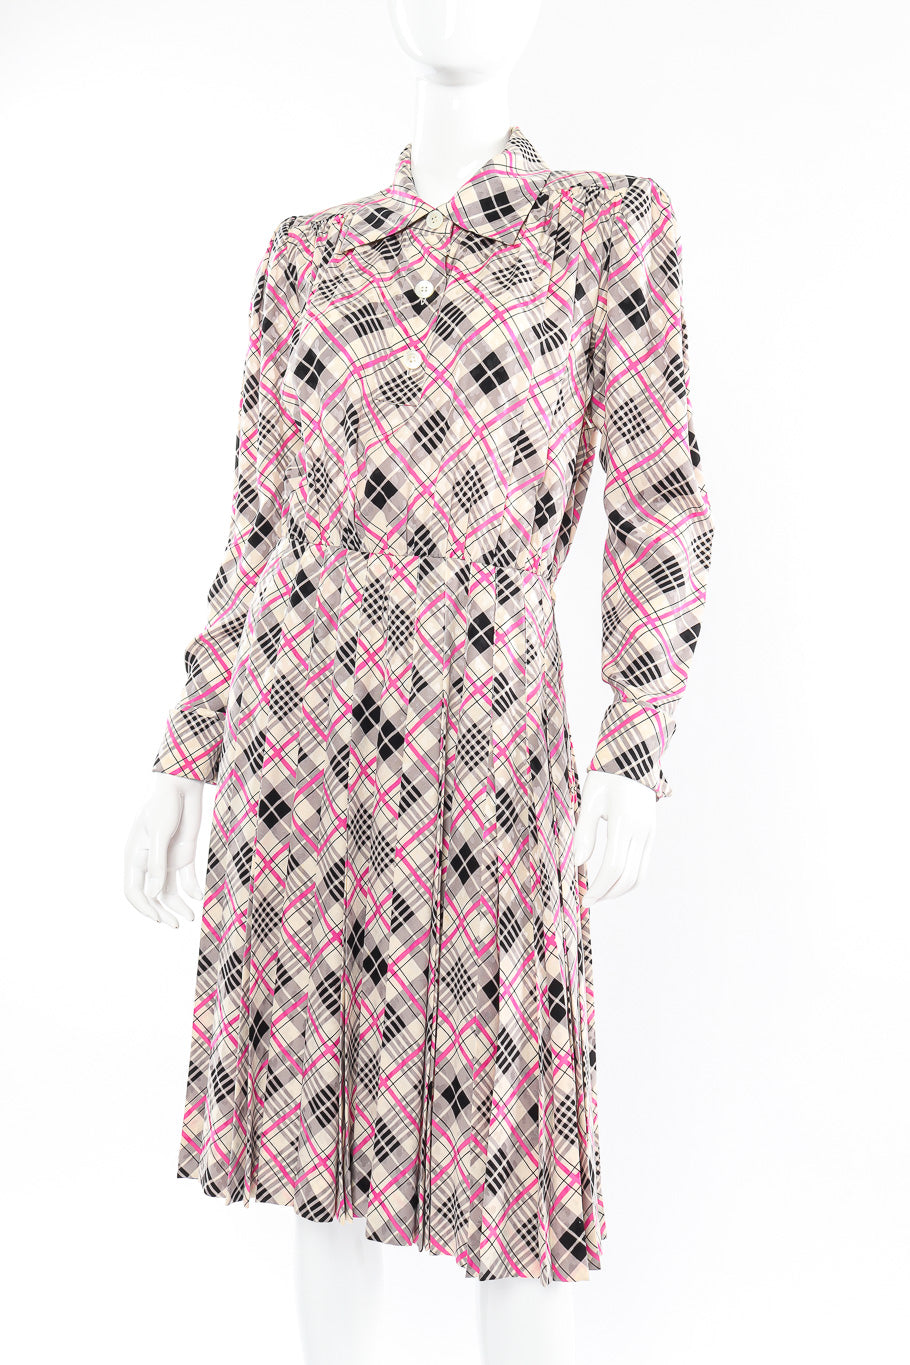 Silk dress by Saint Laurent on mannequin angled close @recessla